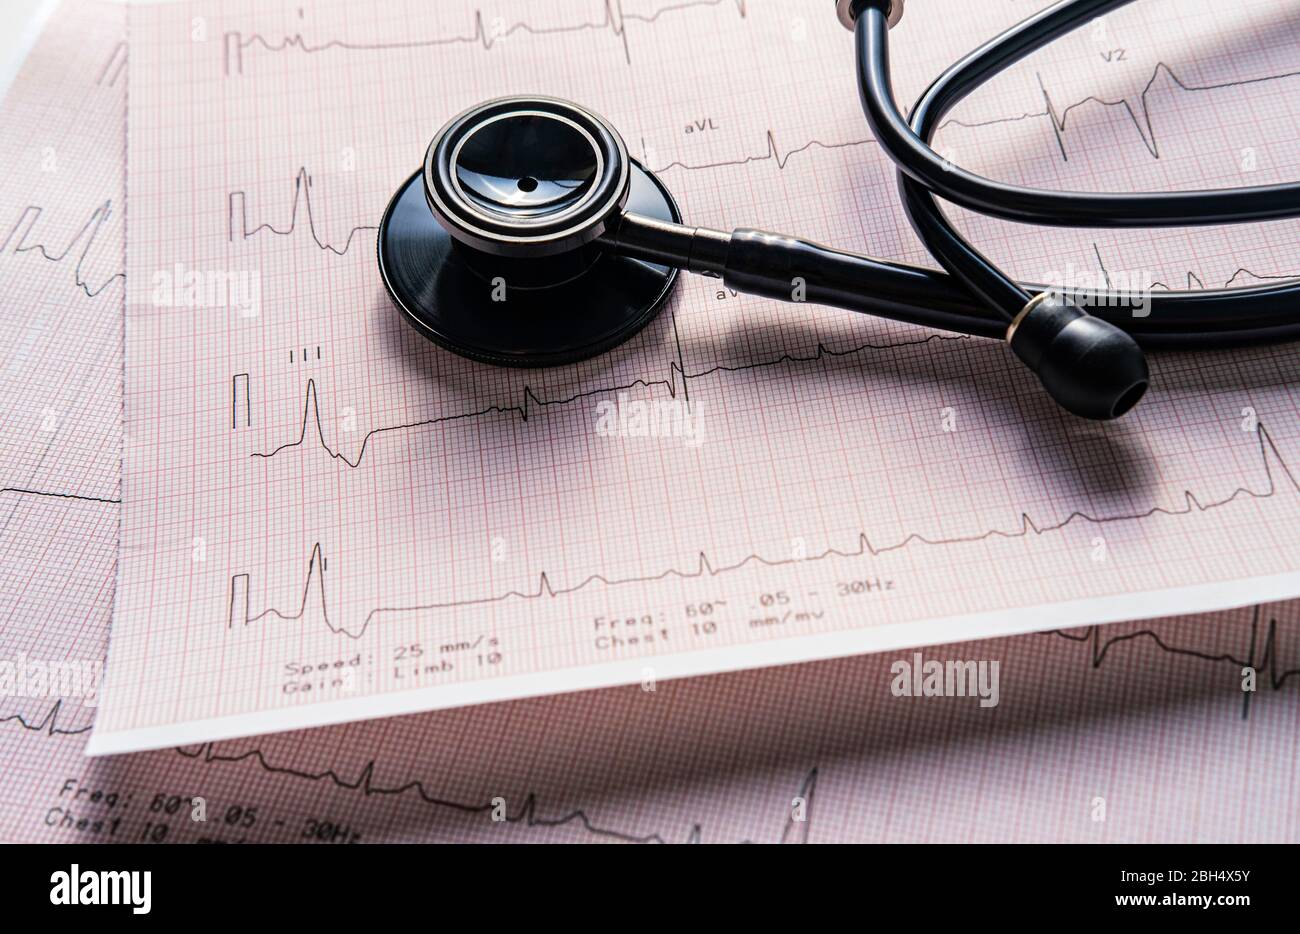 Stethoscope on electrocardiogram Stock Photo